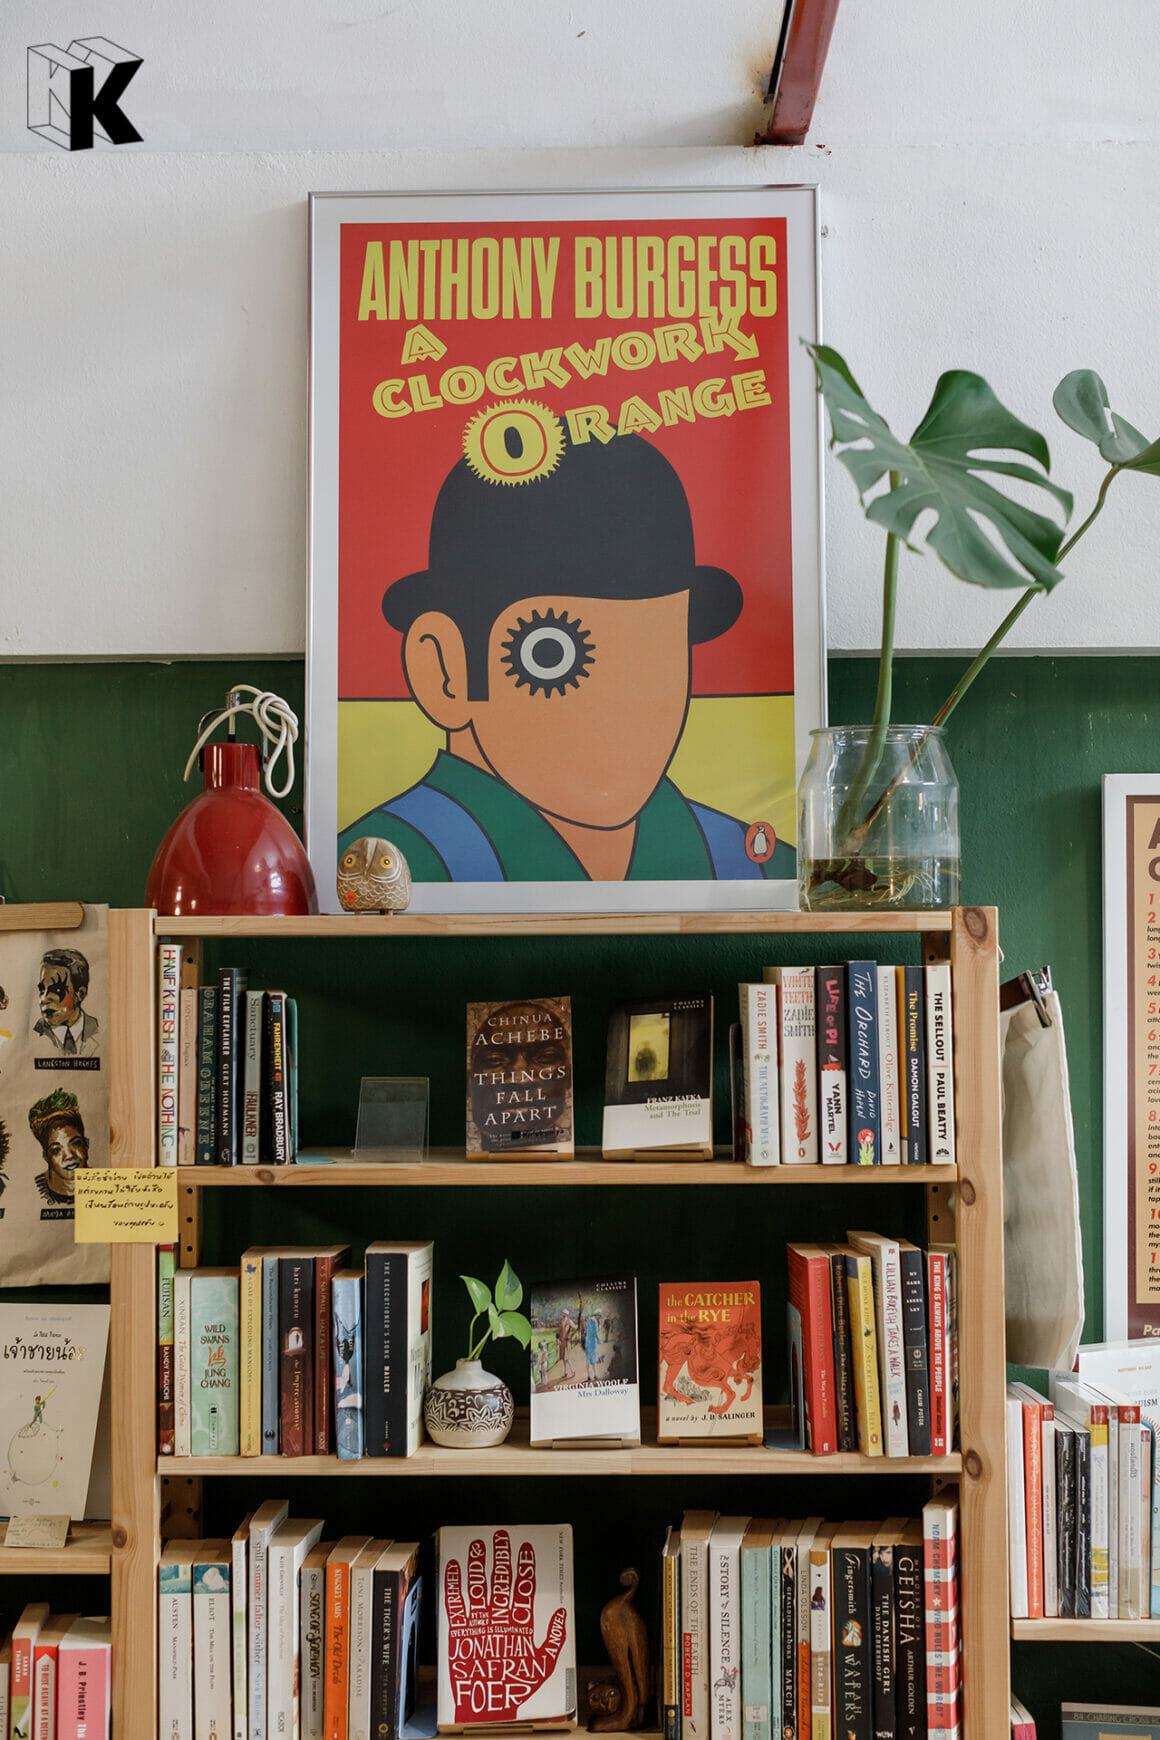 Rare Finds Bookstore and Cafe: ร้านหนังสืออิสระที่ไม่ลึกลับสำหรับชุมชนนักอ่านเชียงใหม่